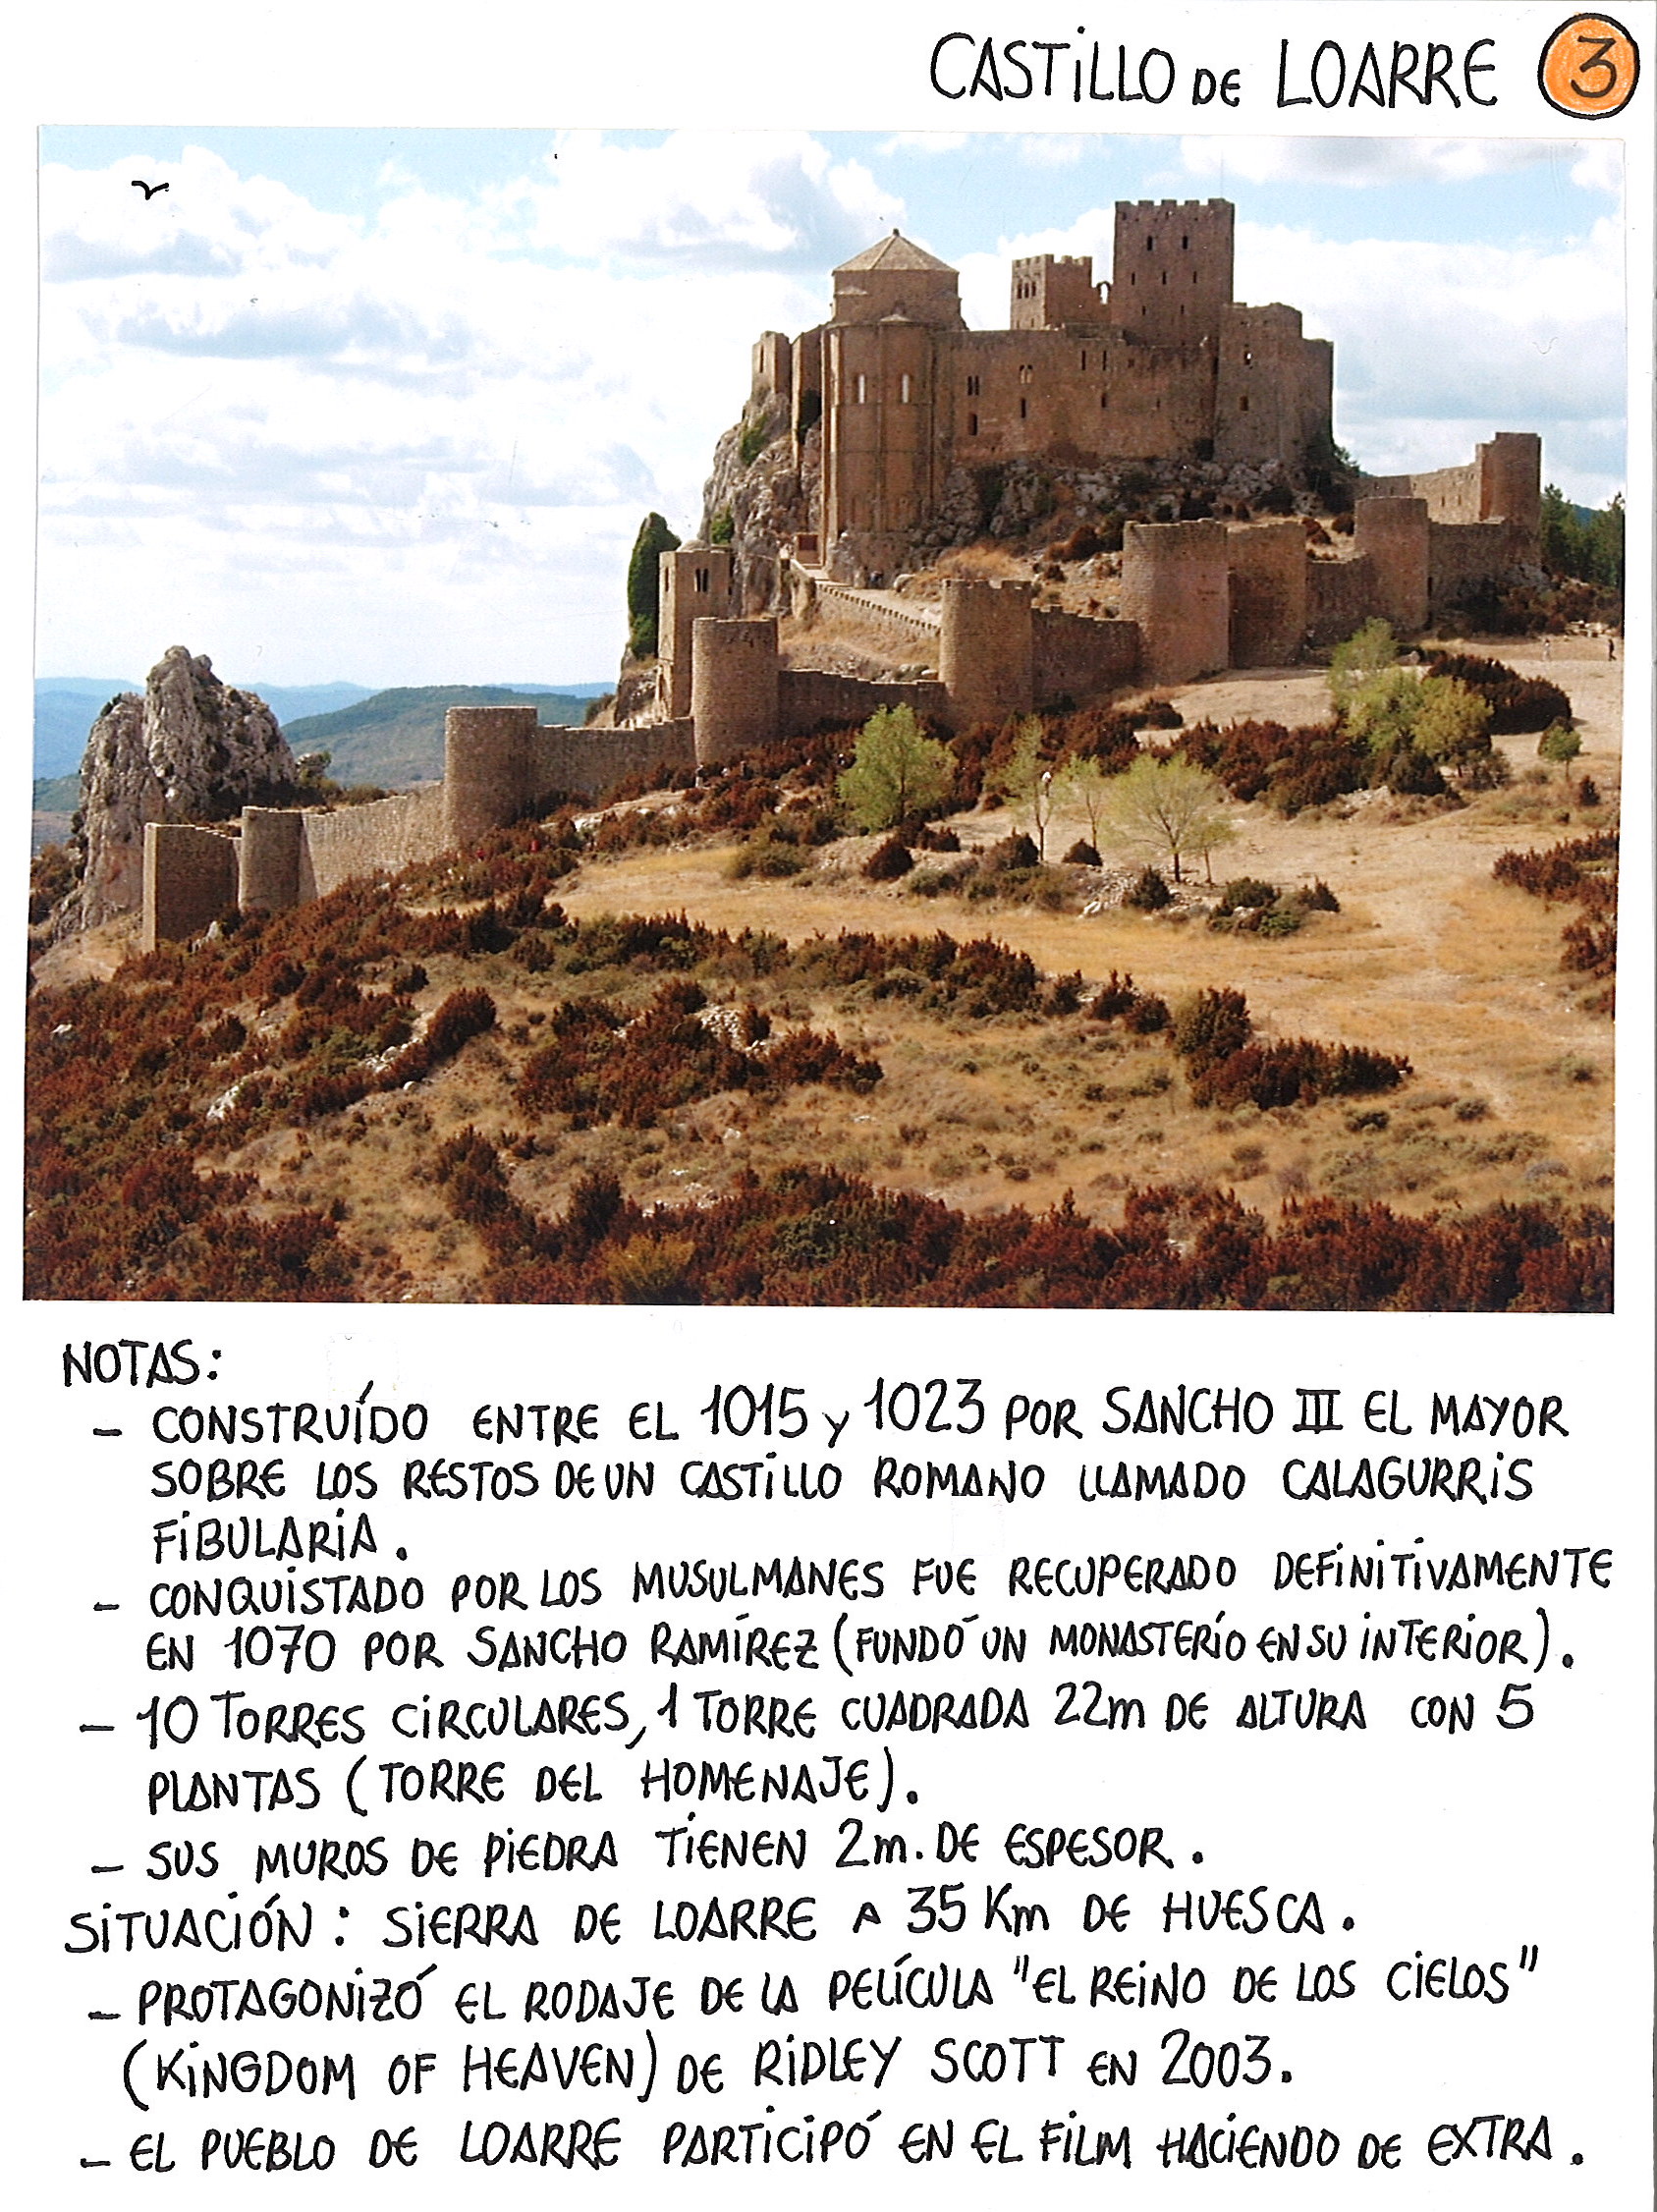 6-Castillo de Loarre